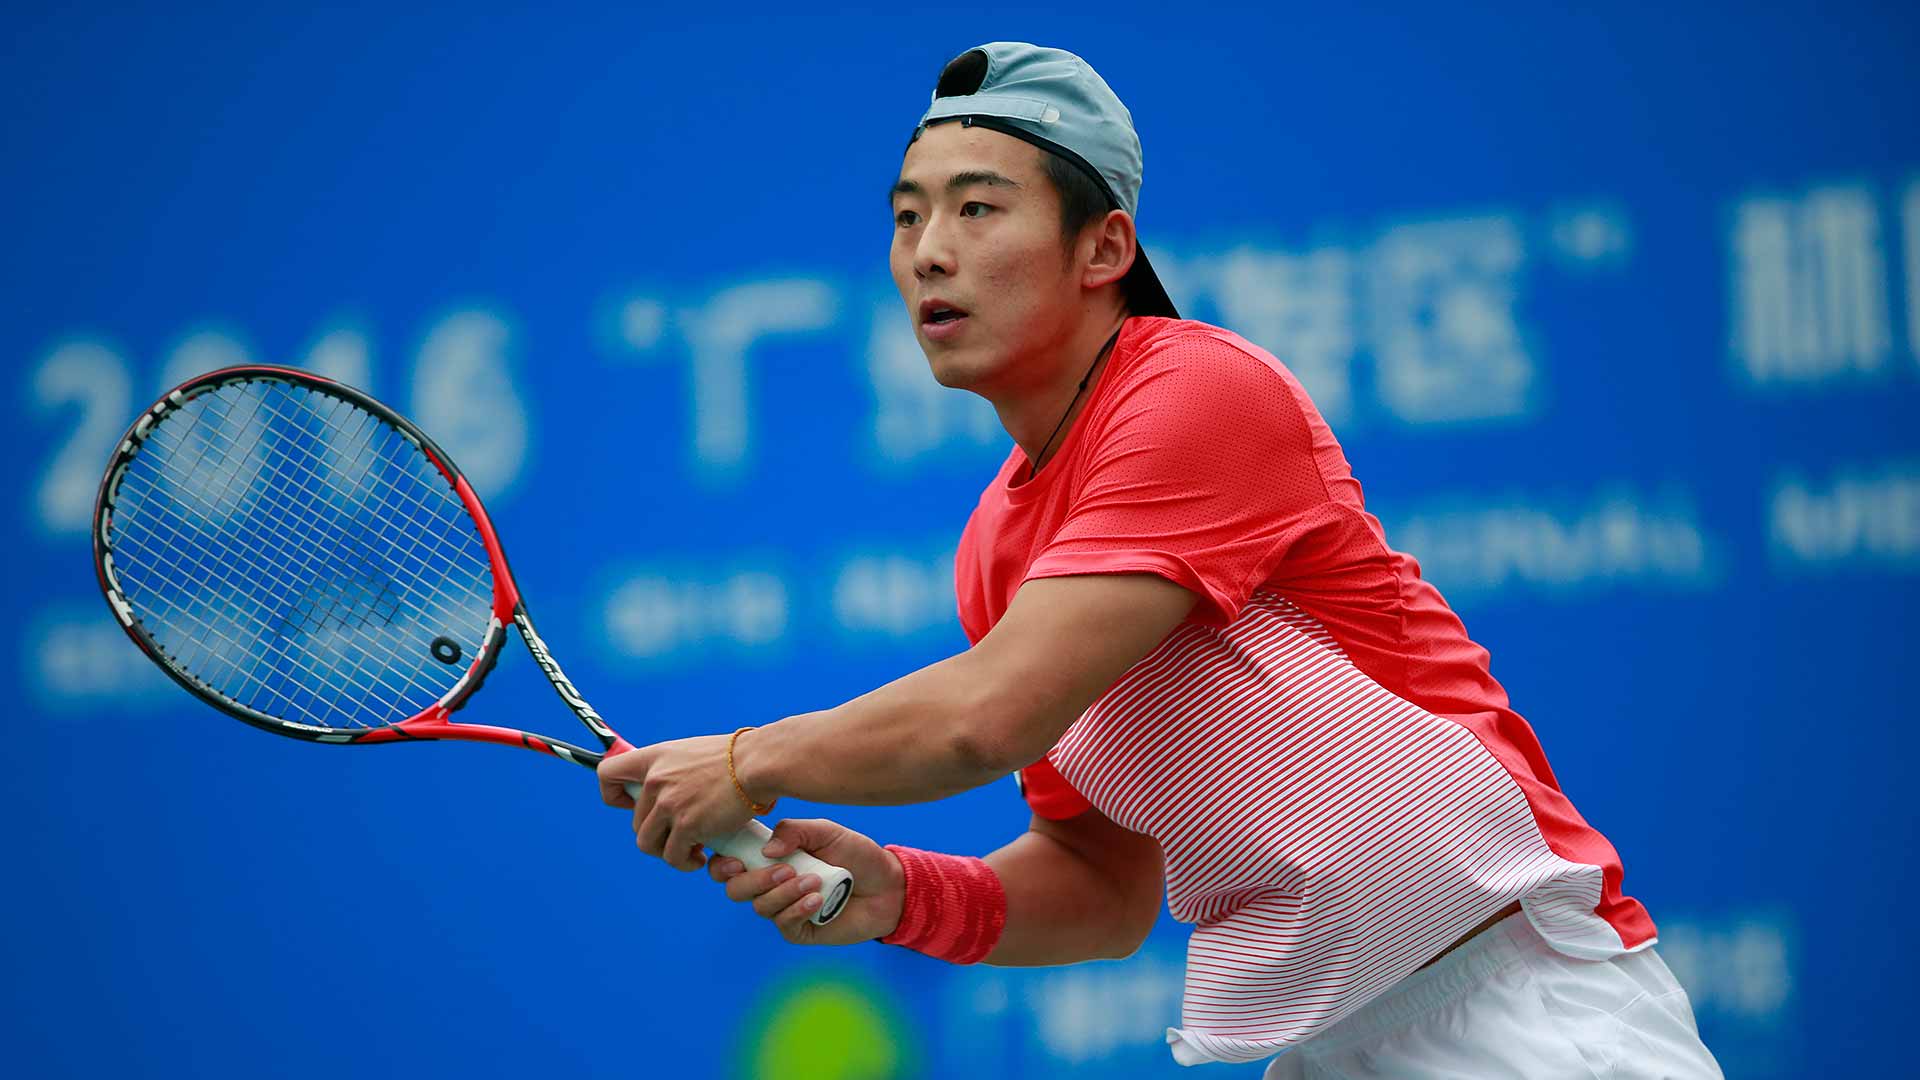  Ze Zhang has continued his run of good form by reaching the semi-finals in Guangzhou.